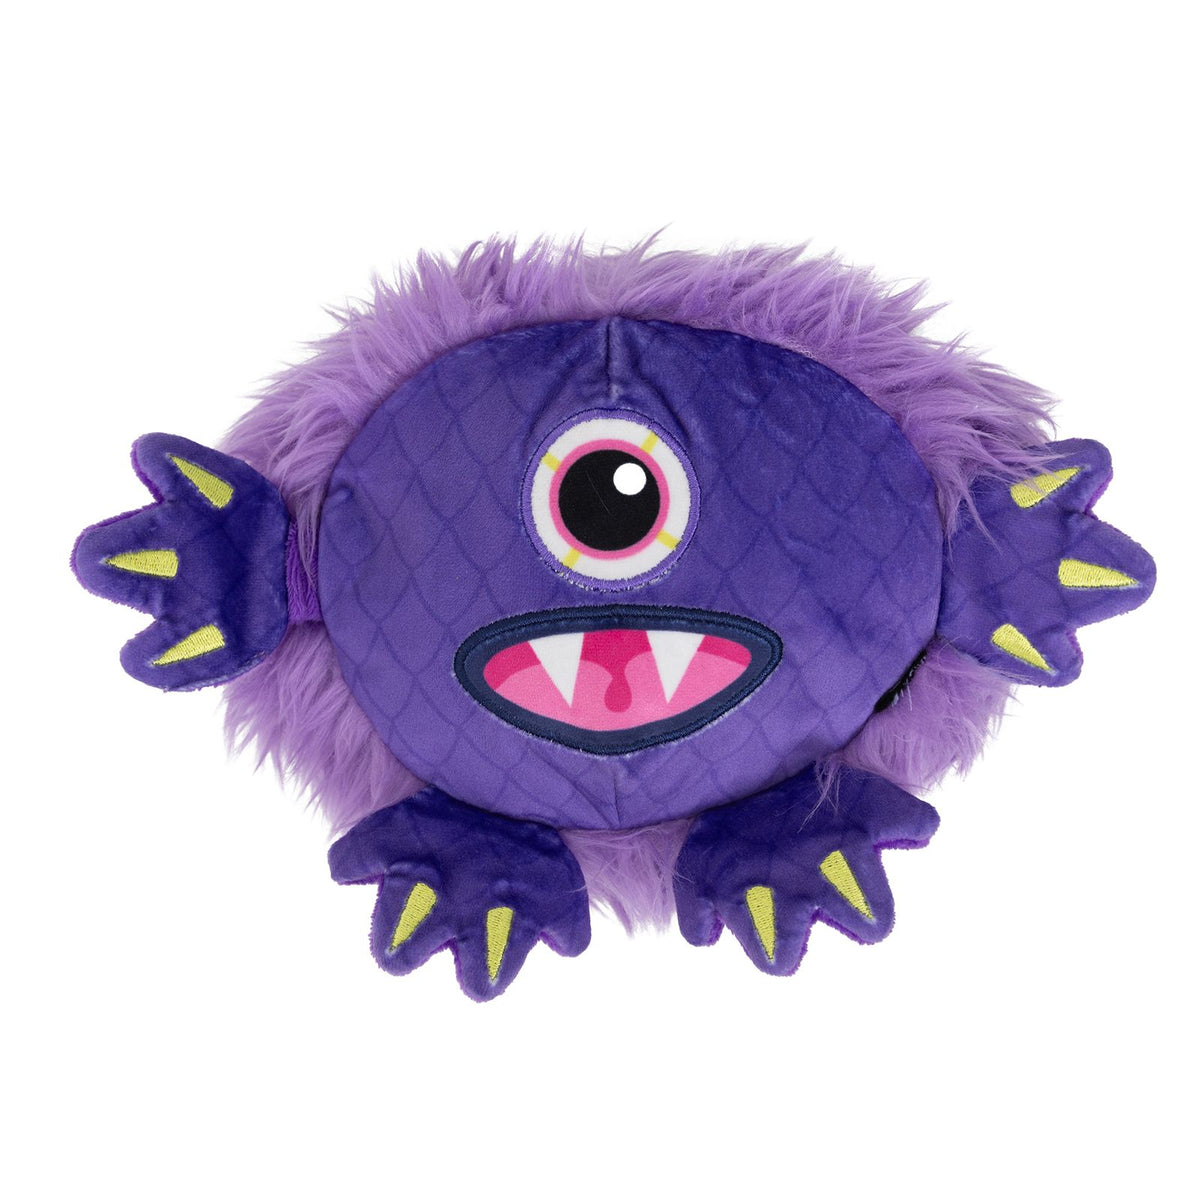 Plush Round Monster Toy